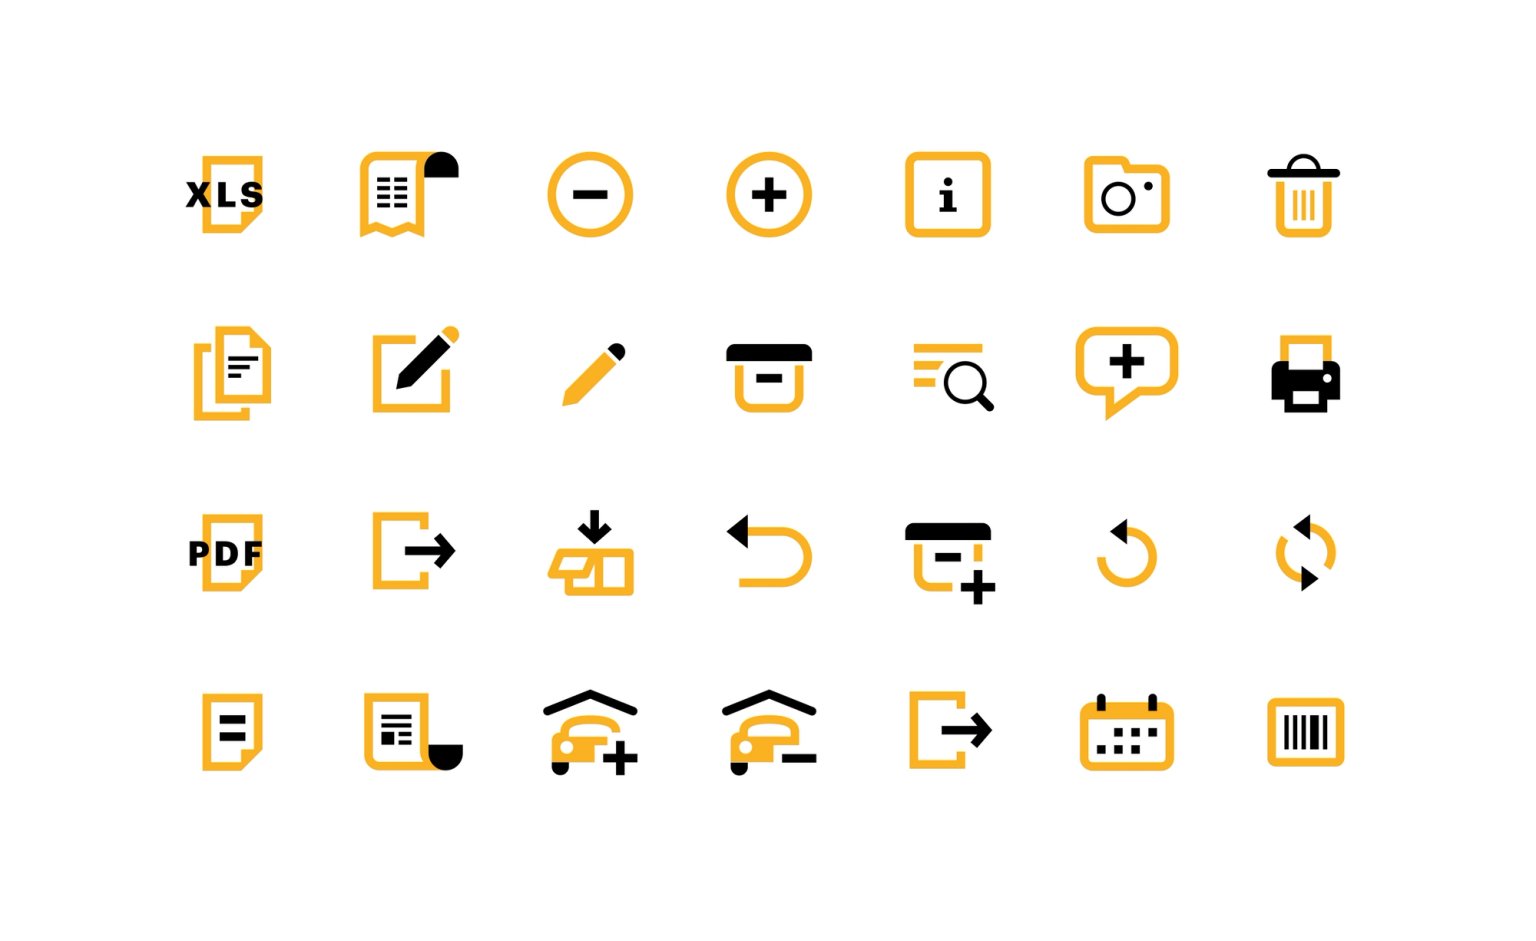  Emex design system icons set